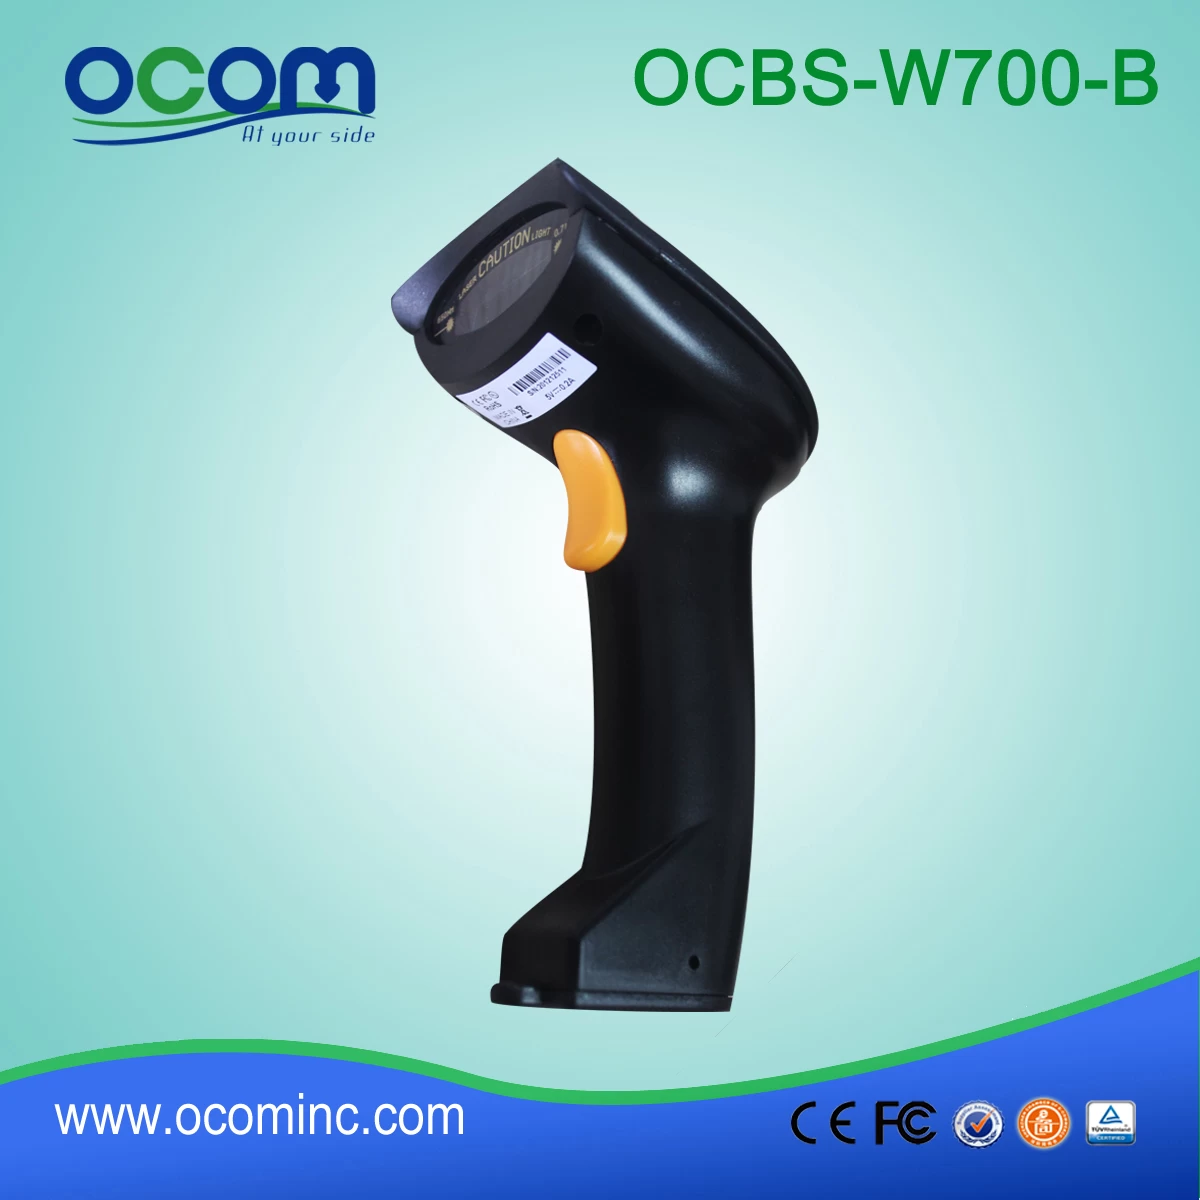 Handheld Bluetooth Barcode Scanner(OCBS-W700-B)